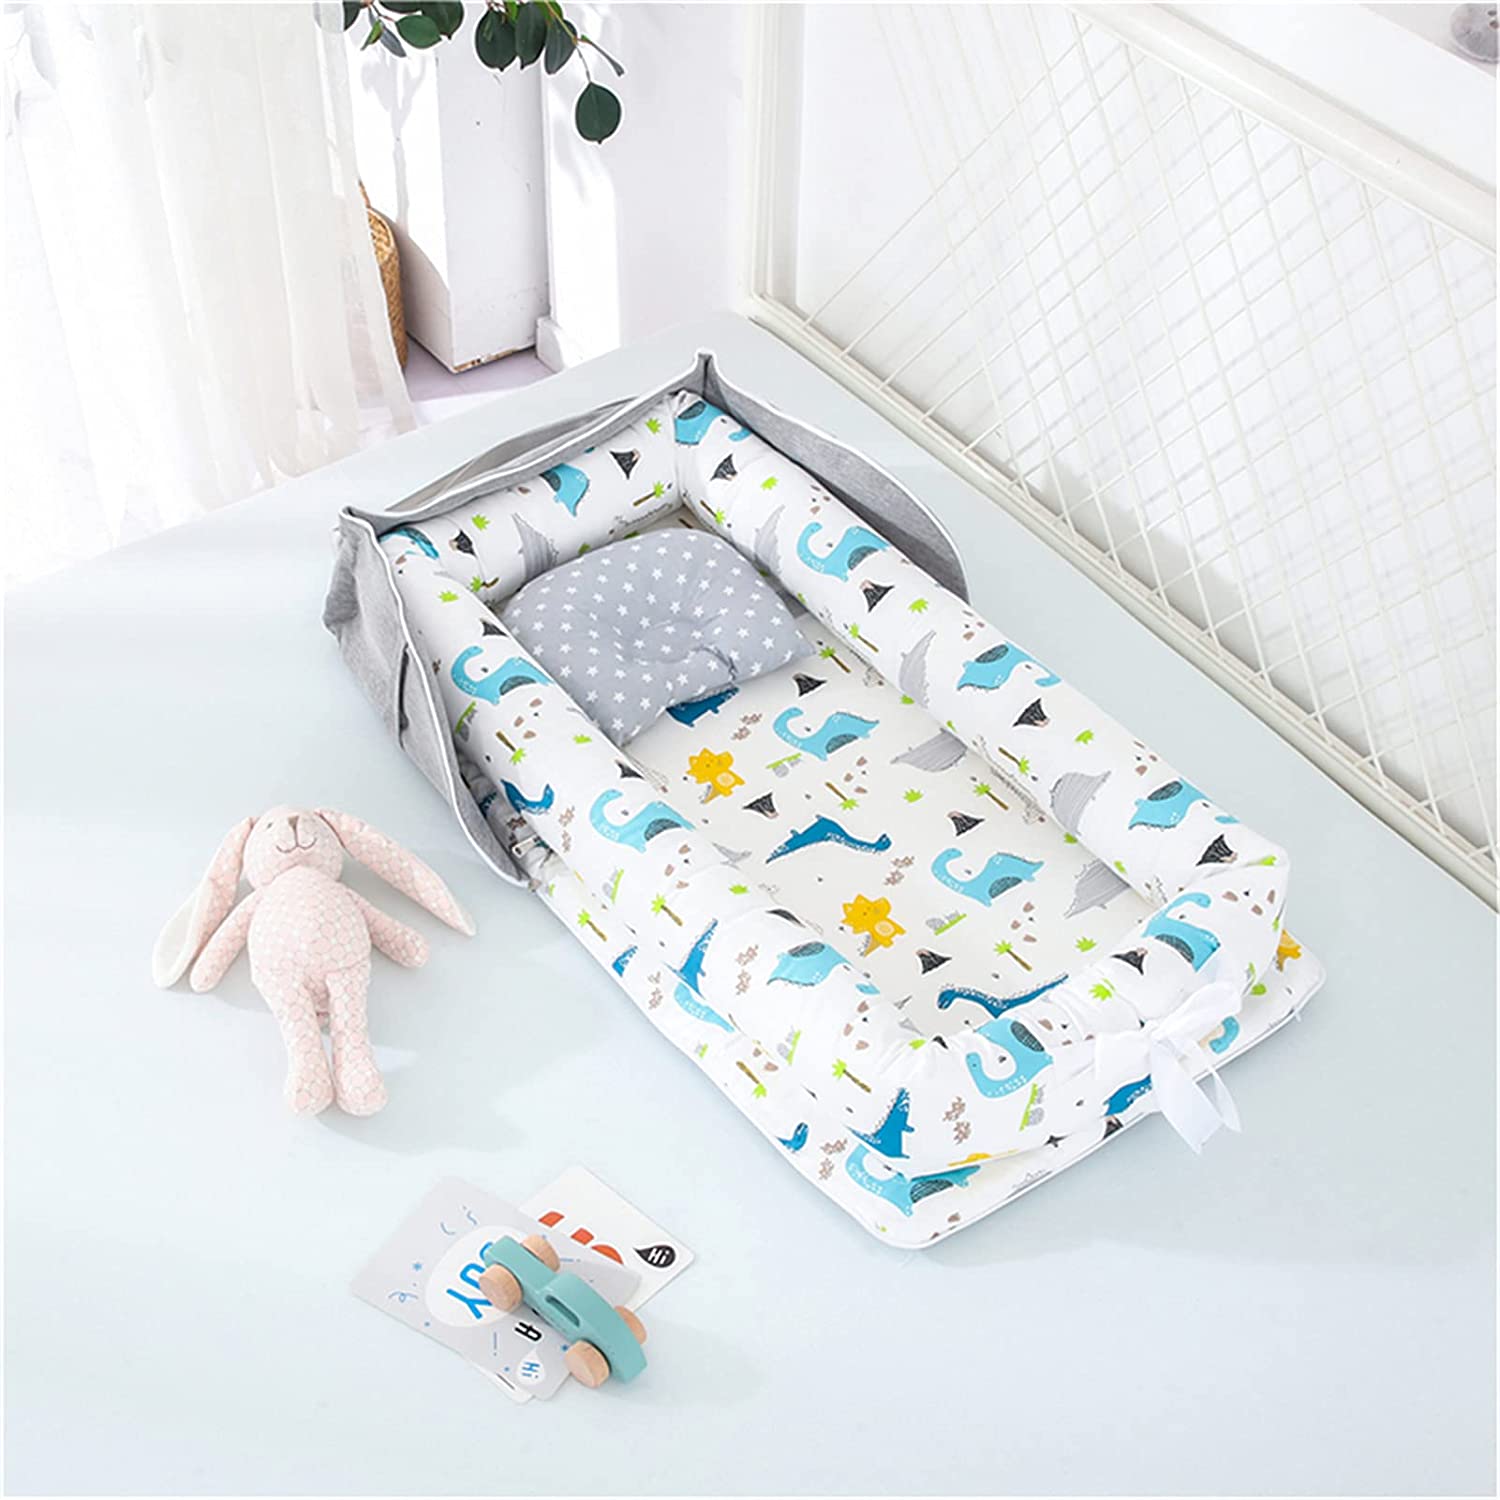 10. Abreeze Baby Bassinet for Bed Bedside, Bedroom, and Travel